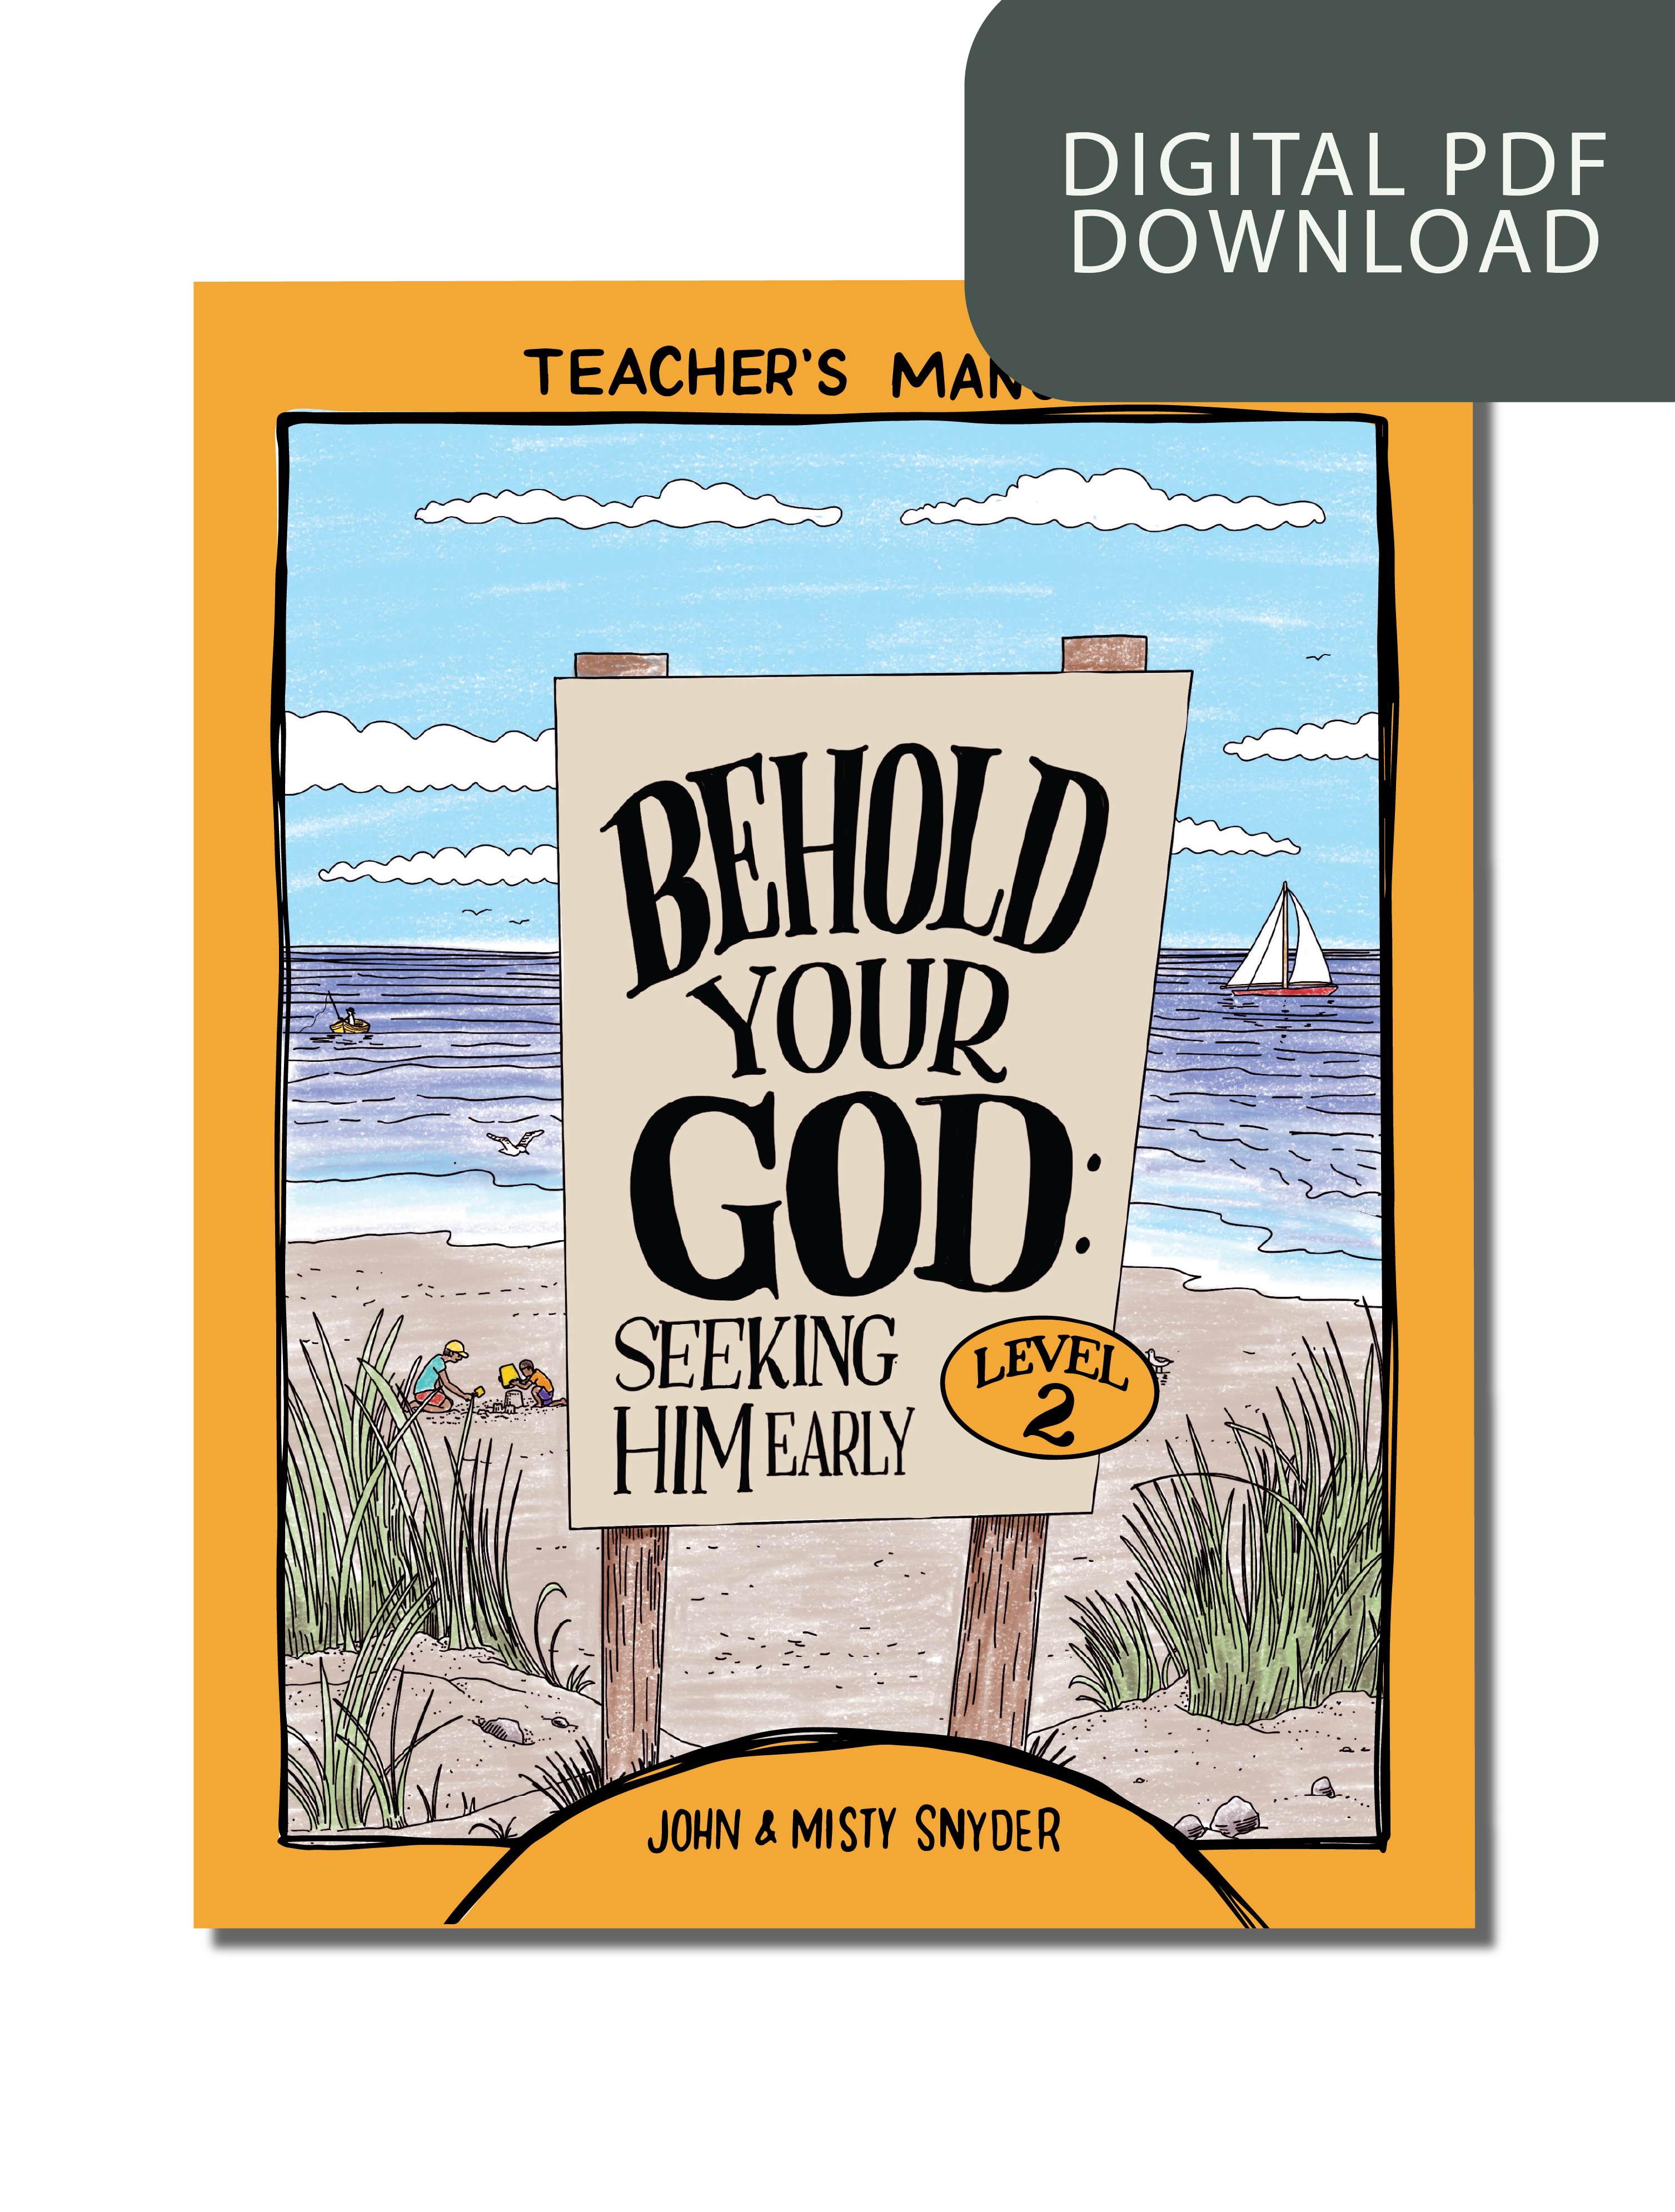 Behold Your God: Seeking Him Early Level 2 Teacher's Kit PDF